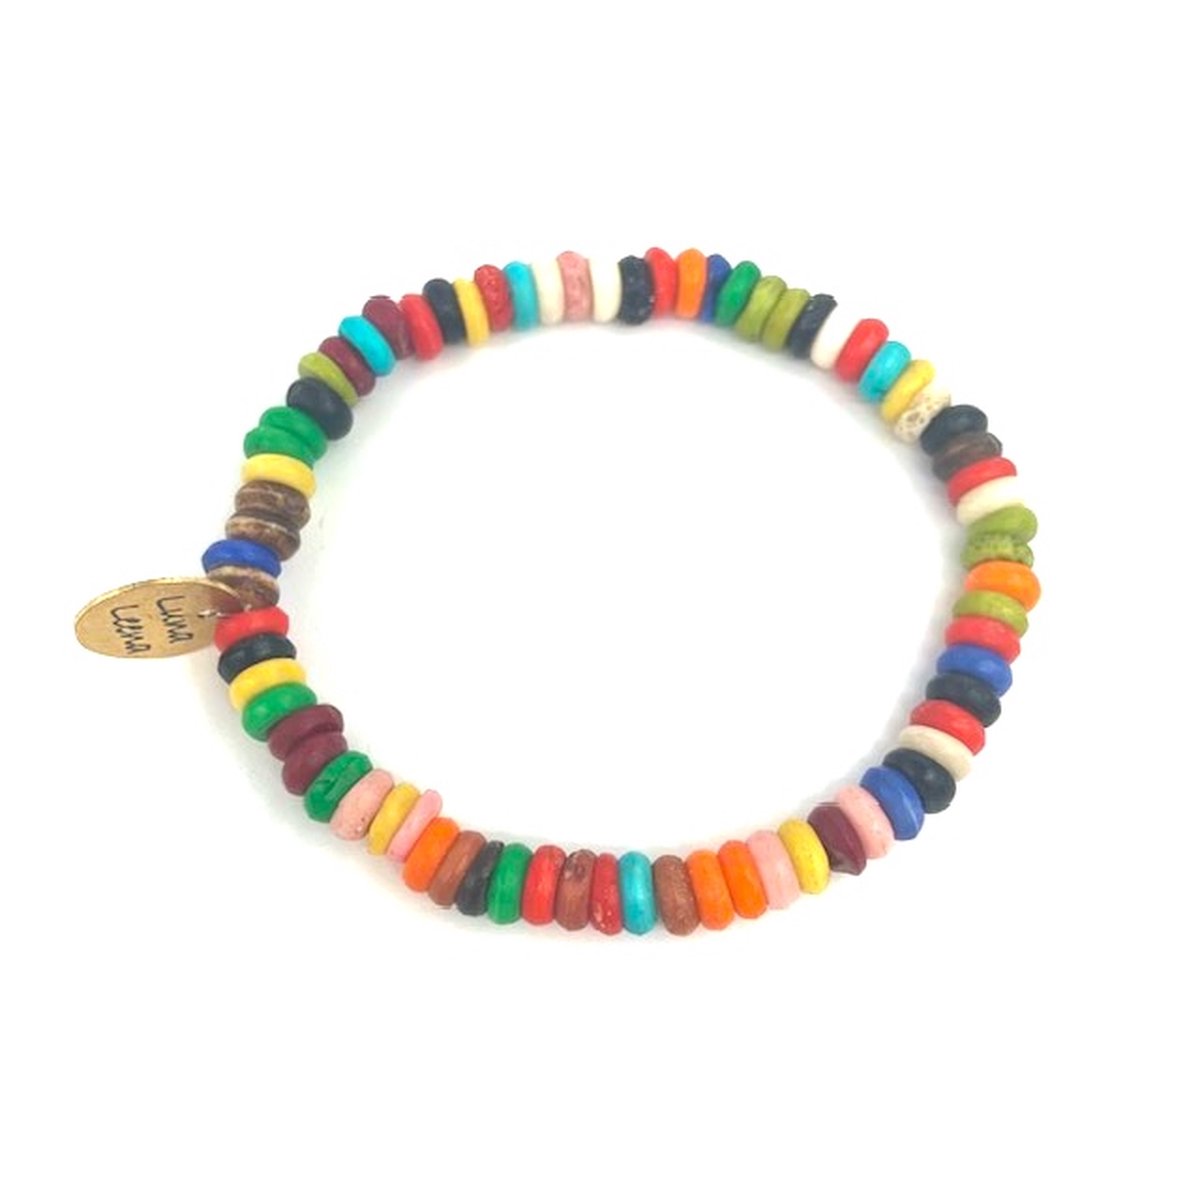 Luna-Leena duurzame armband multi - one size stretch - gerecycled - kralen van bestaande armbanden uit Nepal - handgemaakt in Nepal - bracelet - trendy - feestje - voor elke dag - vintage look - accessoire - cadeau - sieraad - kleurig - rainbow